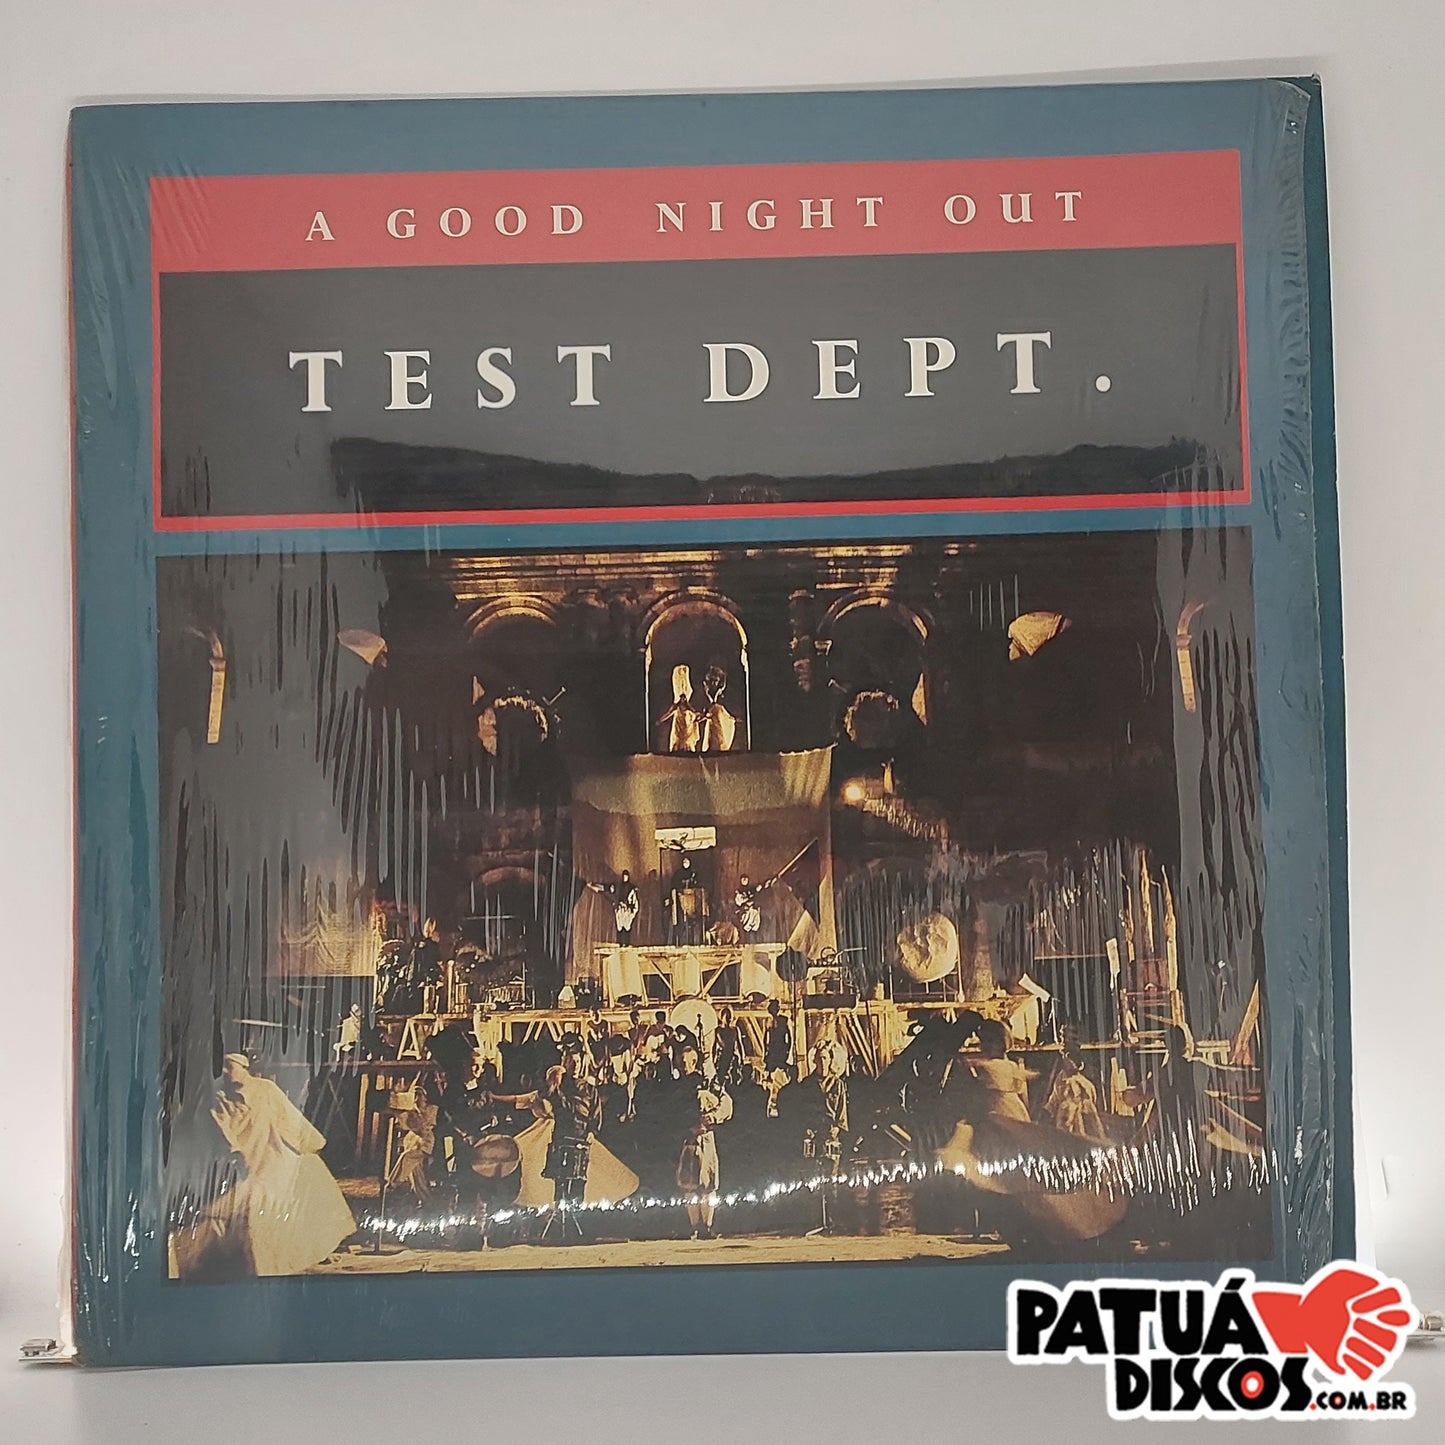 Test Dept - A Good Night Out - LP